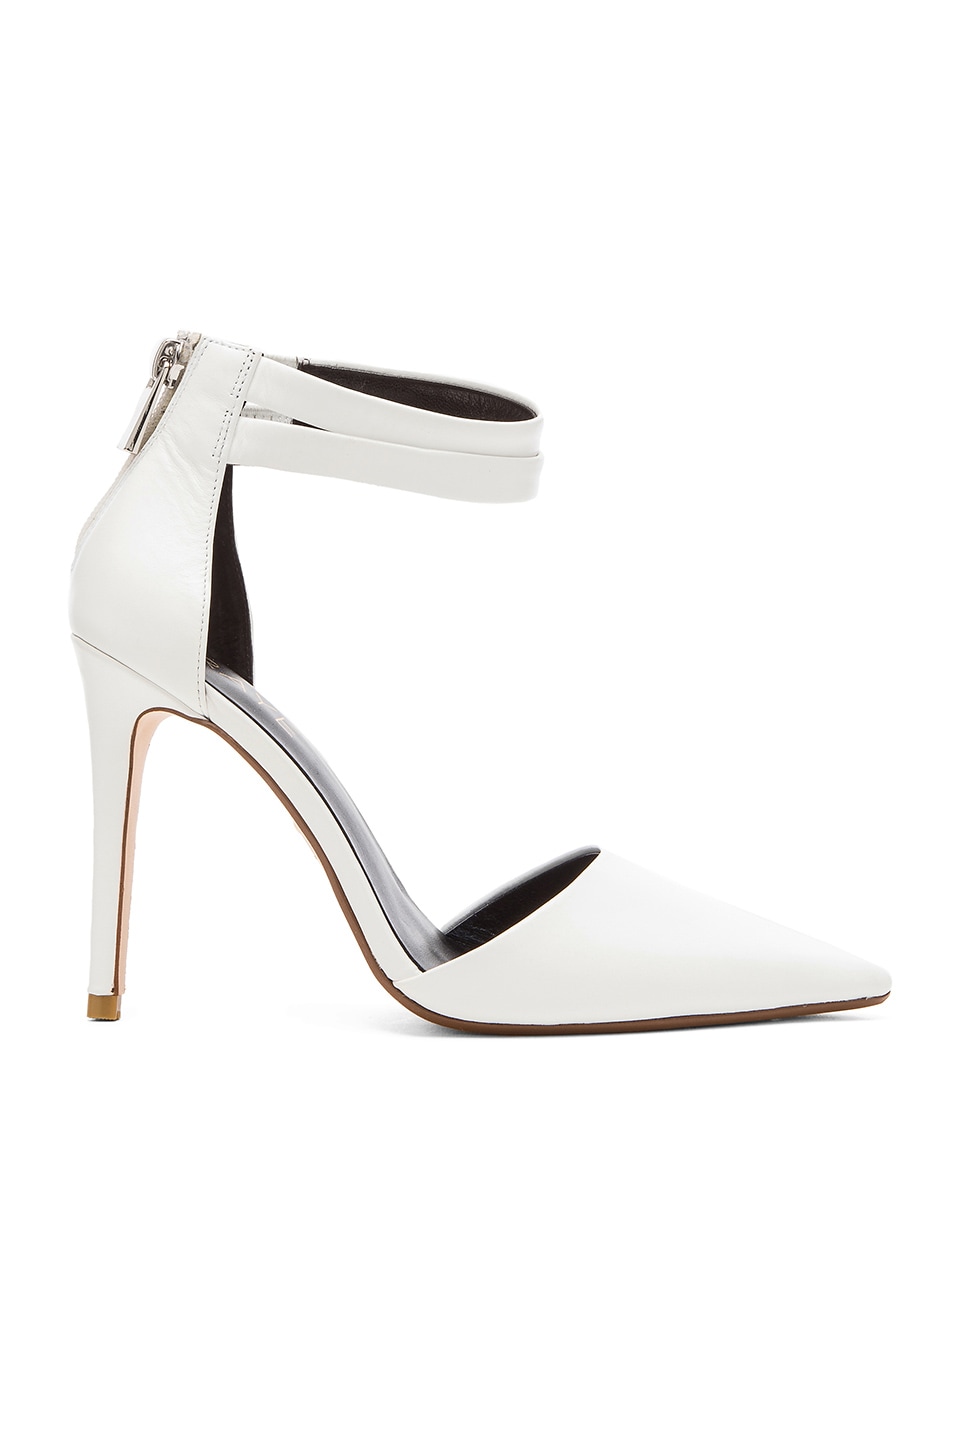 RAYE Candace Heel in White | REVOLVE